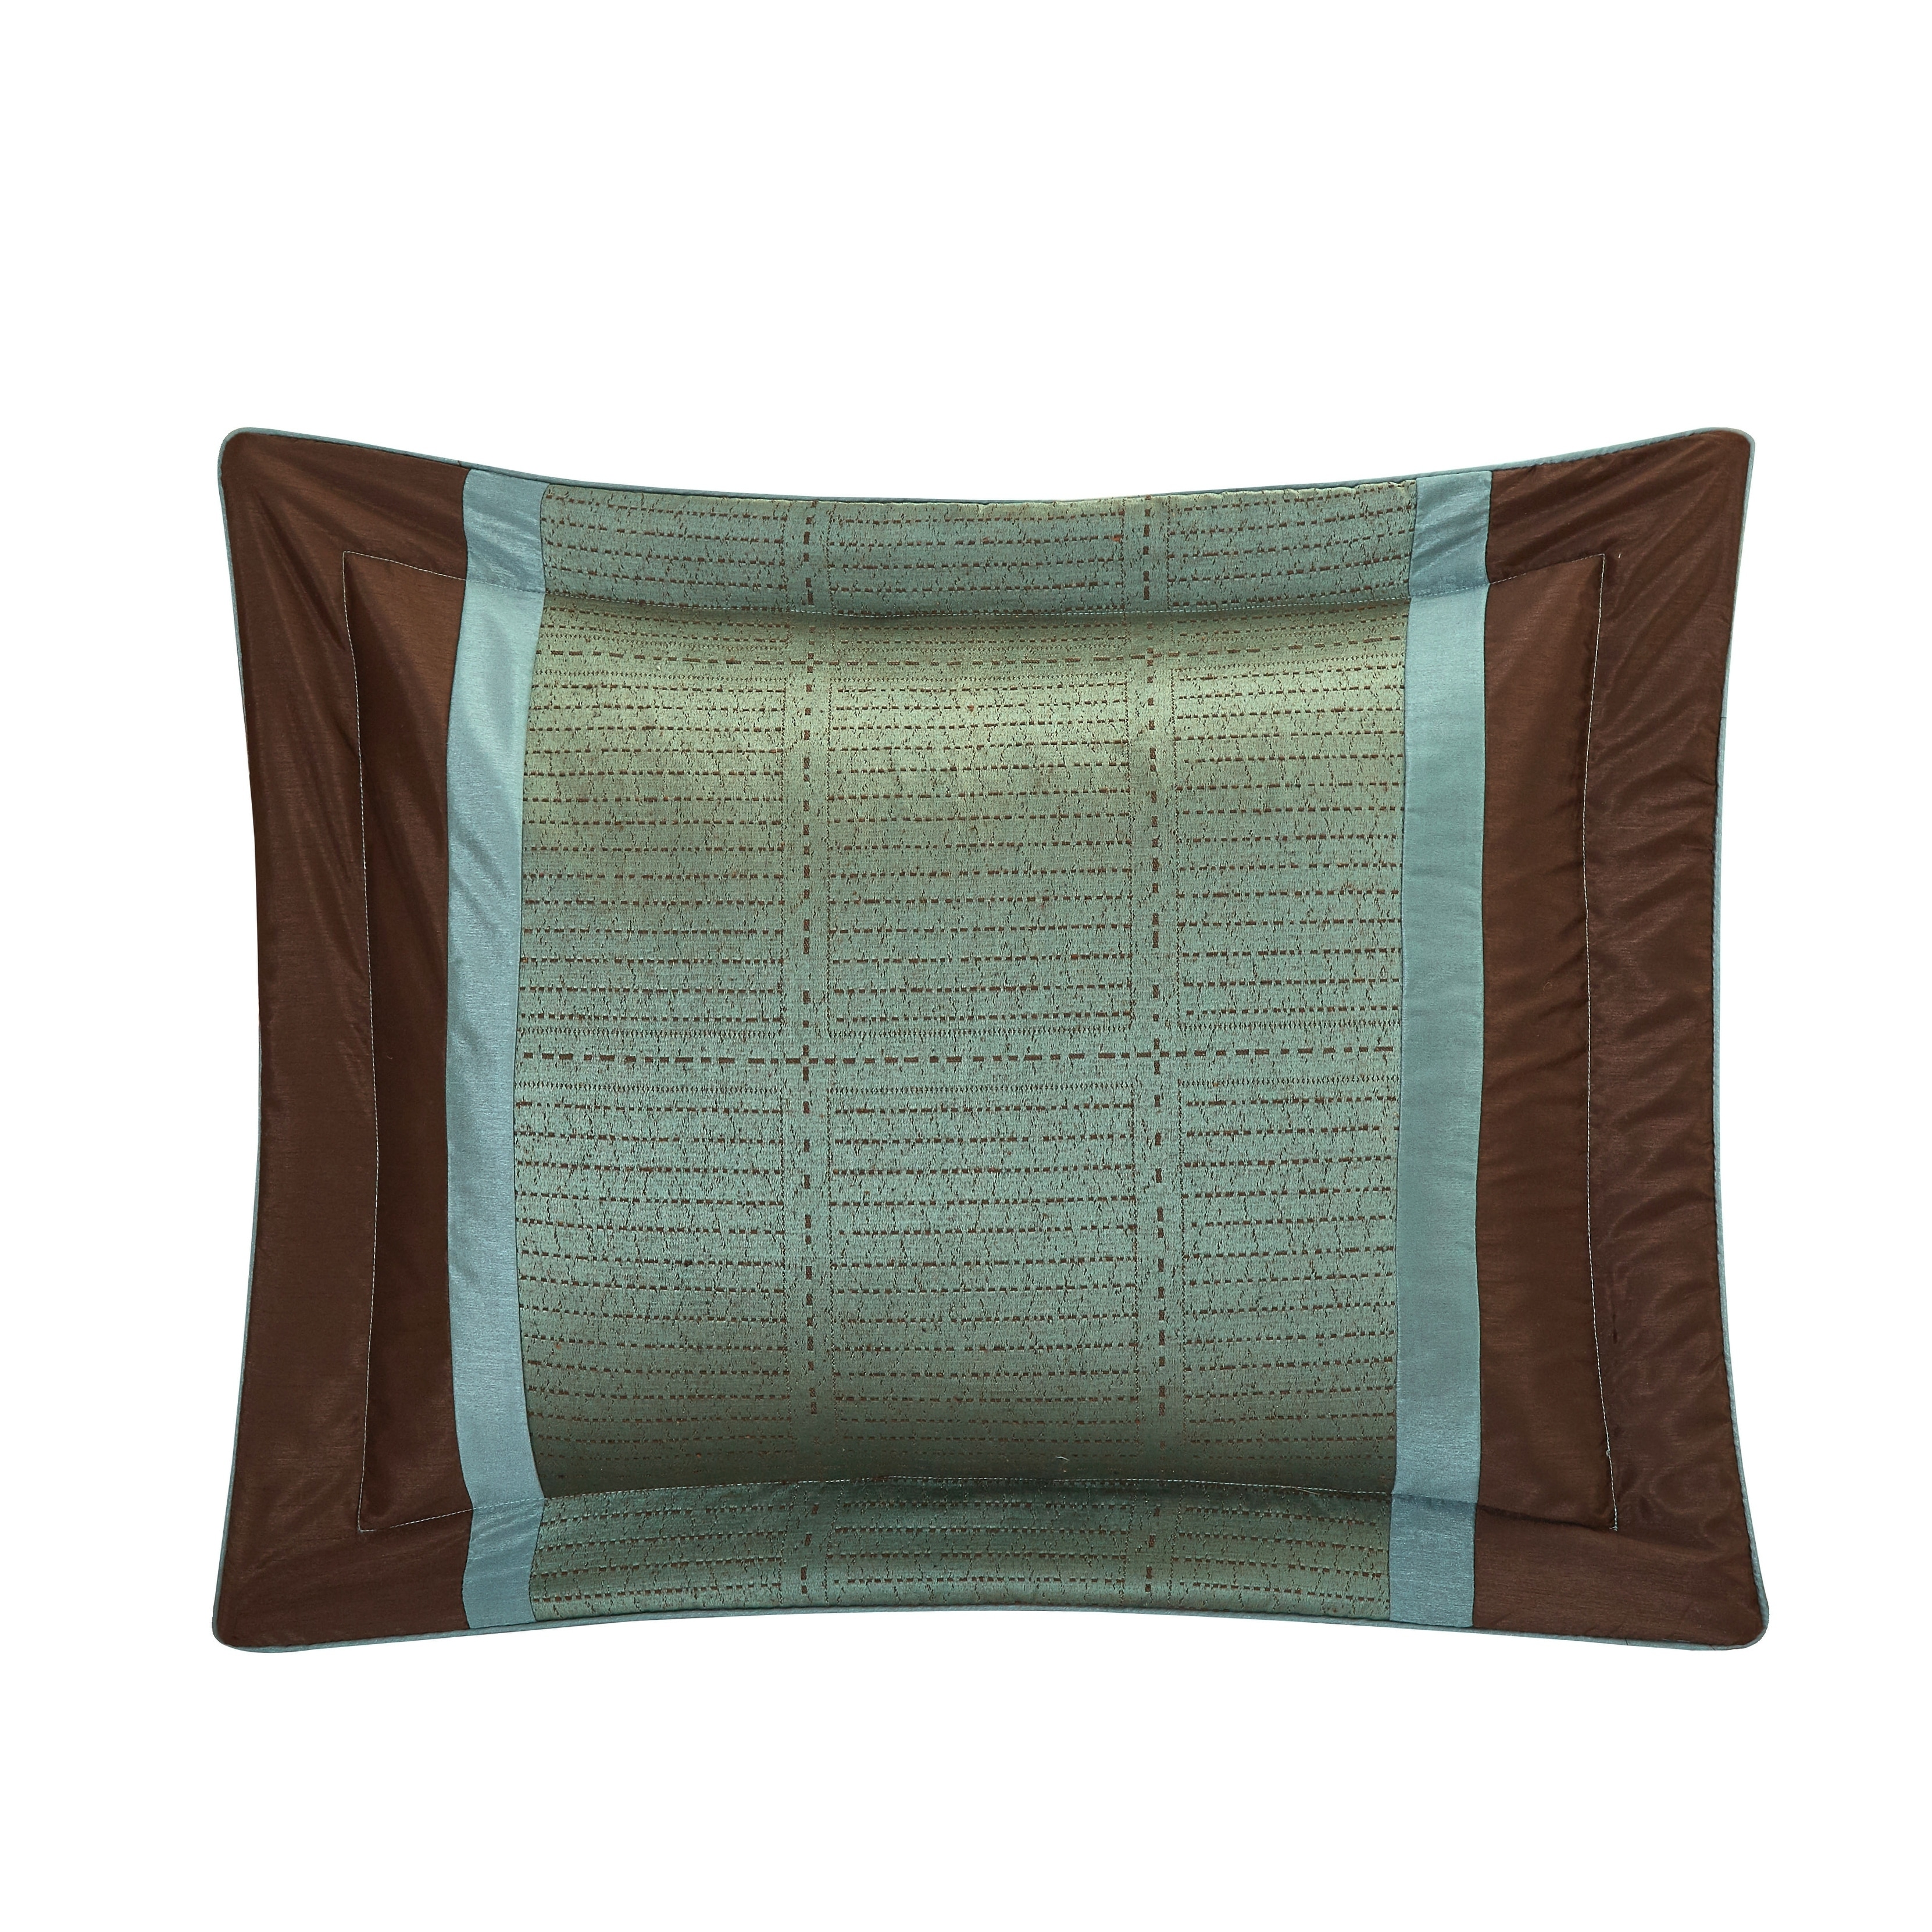 Nanshing Tobey 7-Piece Bedding Comforter Set, Turquoise, Queen - image 5 of 5